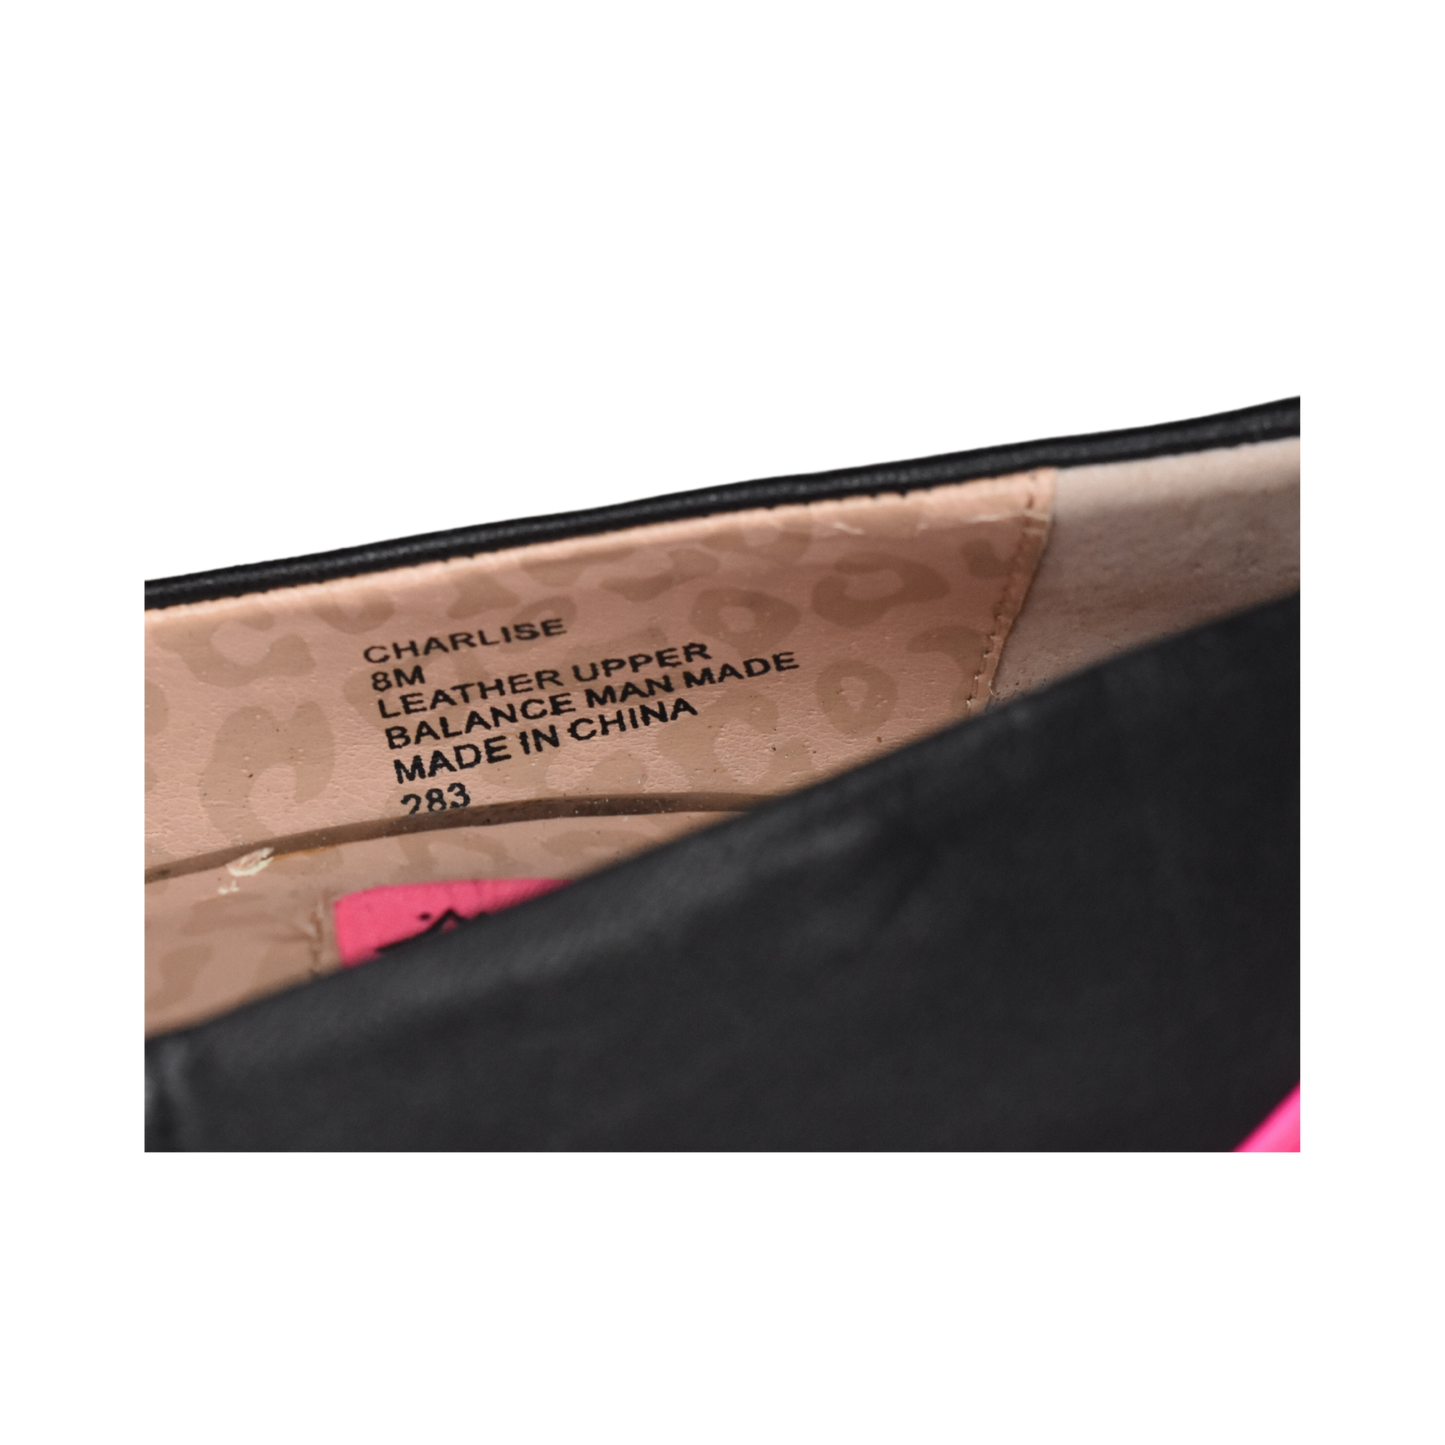 Betsey Johnson High Heels Closed-Toe Pumps Pink, Black Size 8M SKU 000192-6